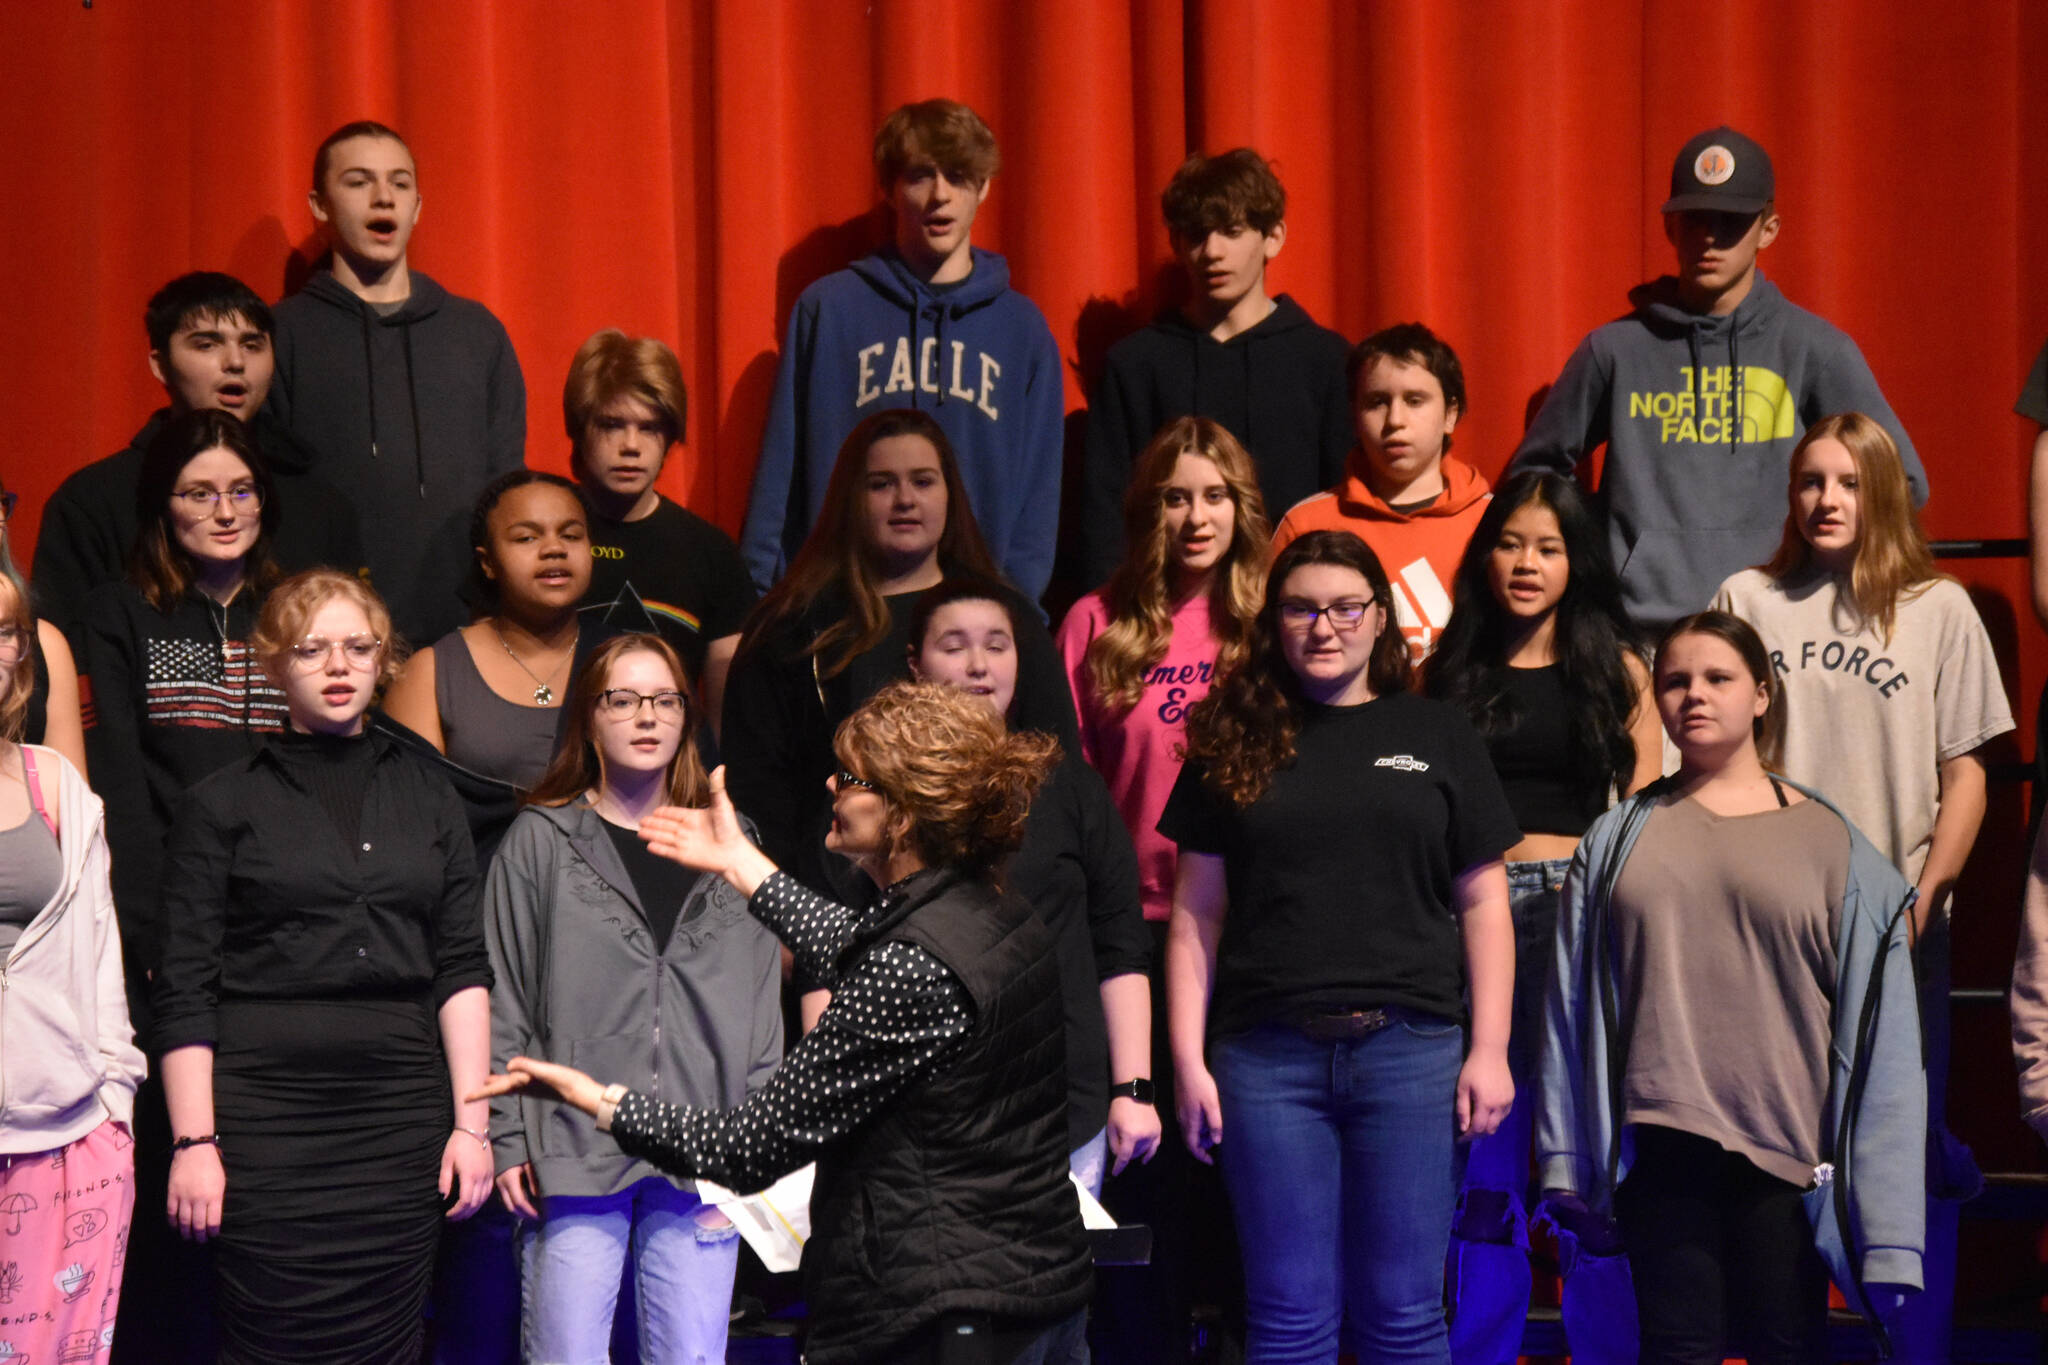 Audra Calloway directs the Soldotna High School Choir in a rehersal on Oct. 11, 2022, at Soldotna High School in Soldotna, Alaska. (Jake Dye/Peninsula Clarion)